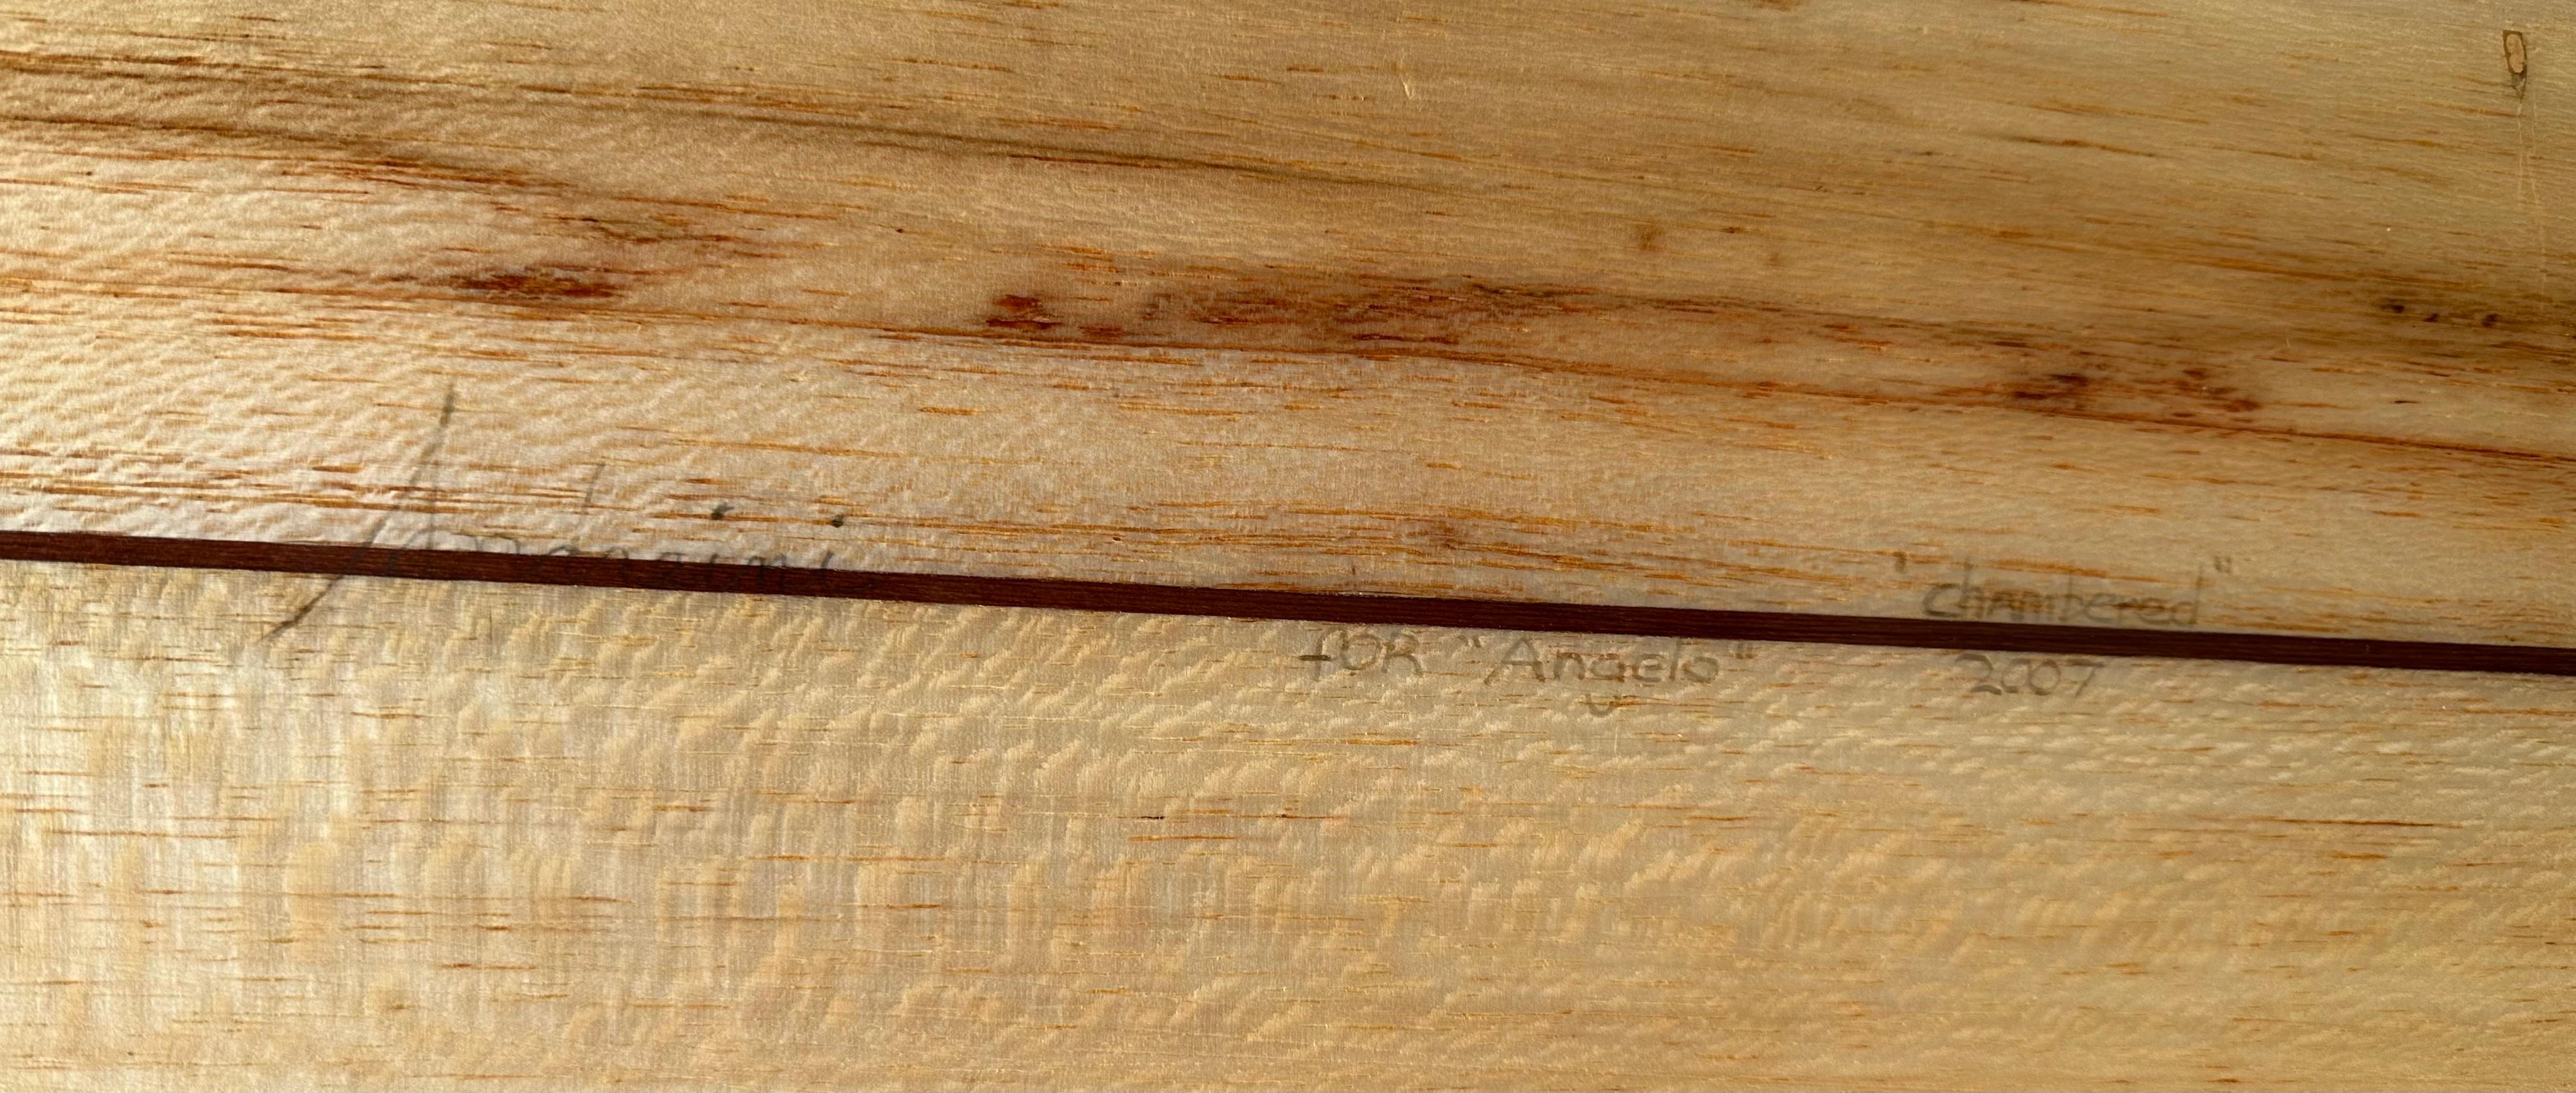 Marc Andreini balsa wooden longboard In Good Condition For Sale In Haleiwa, HI